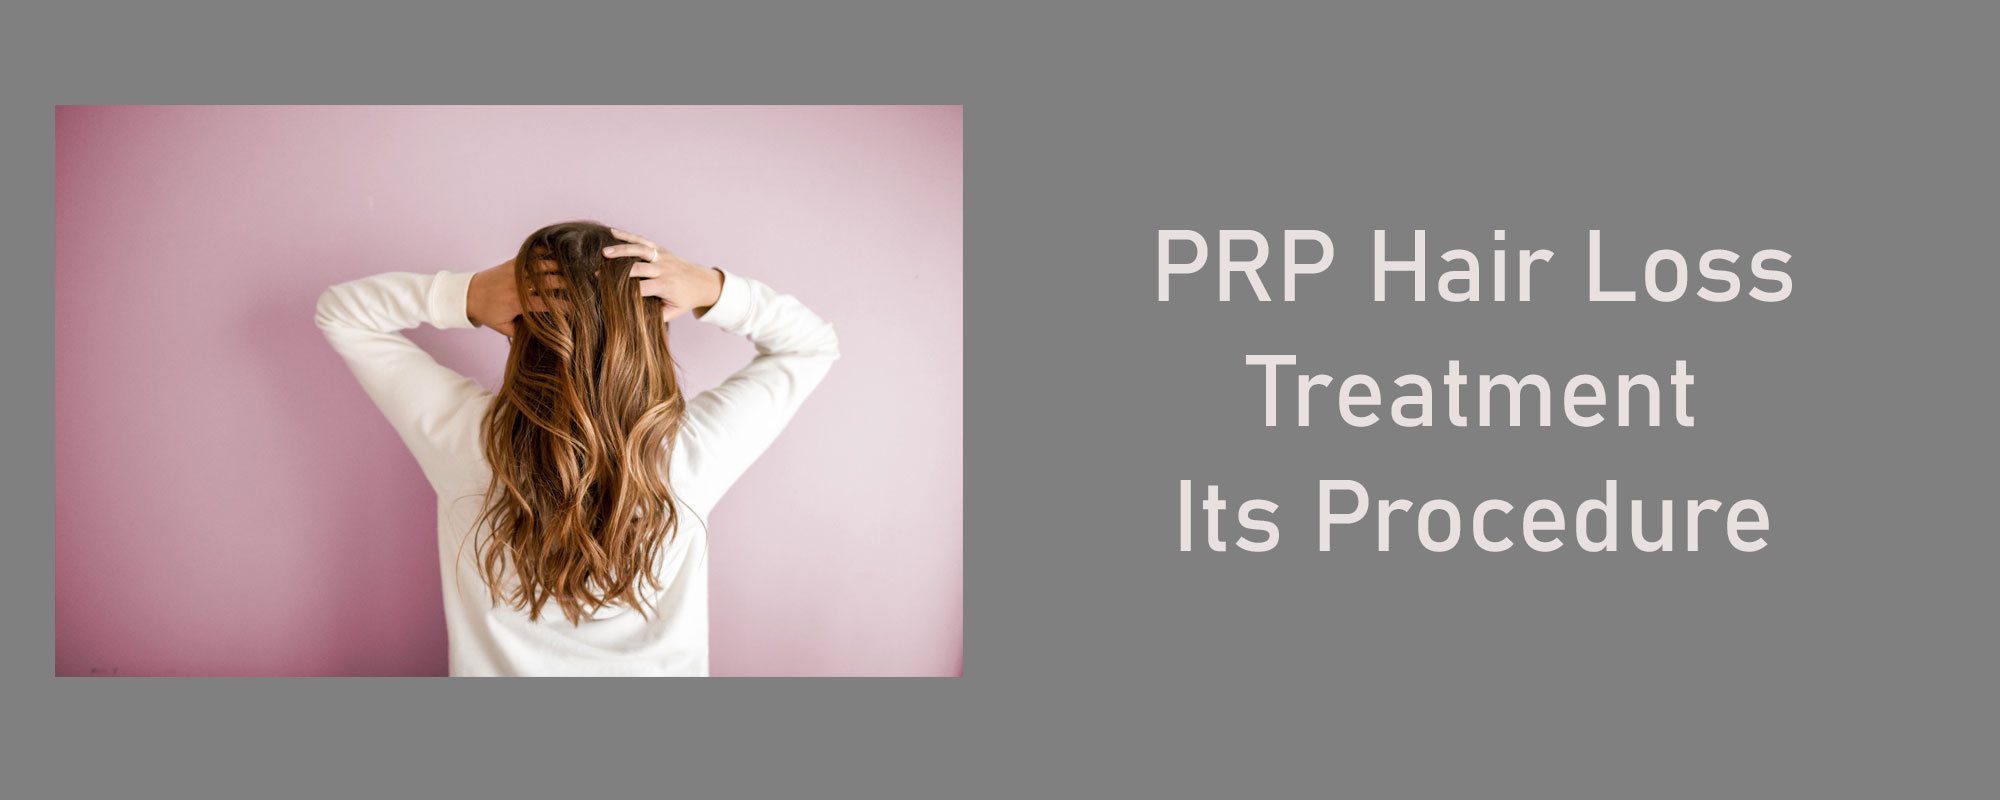 PRP Hair Loss Treatment & Its Procedure - 1